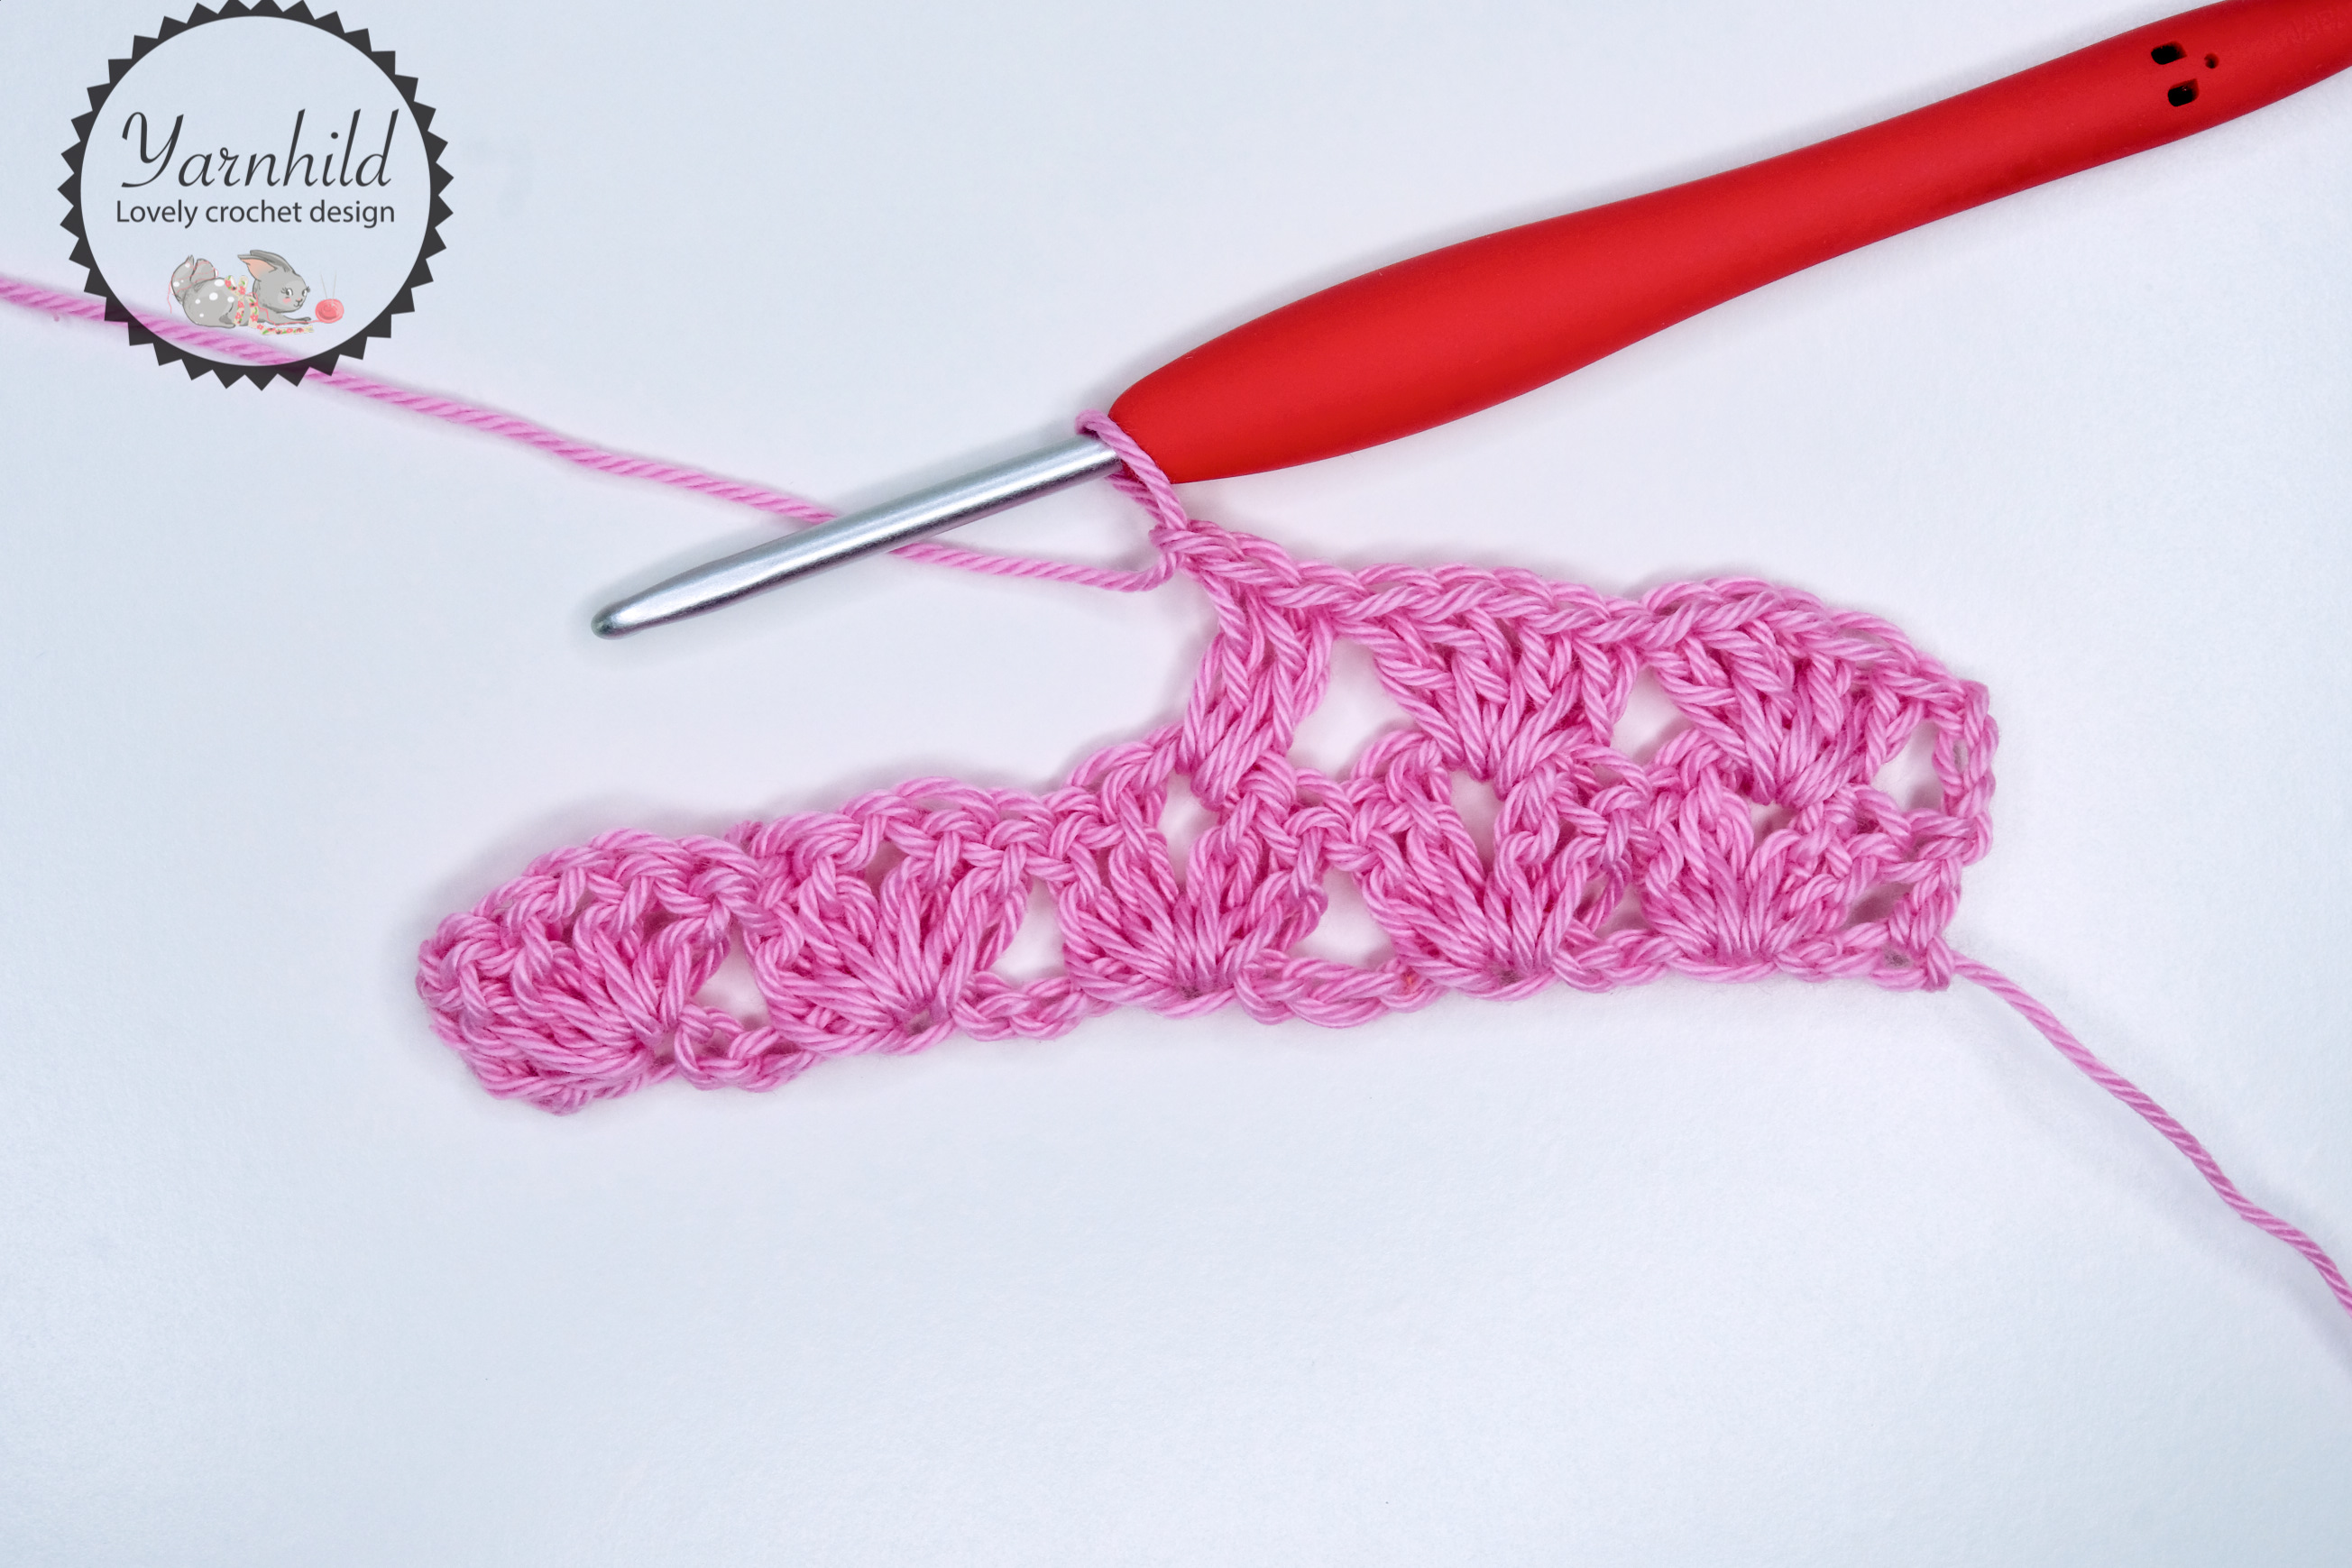 Crochet stitches - The Iris Stitch 